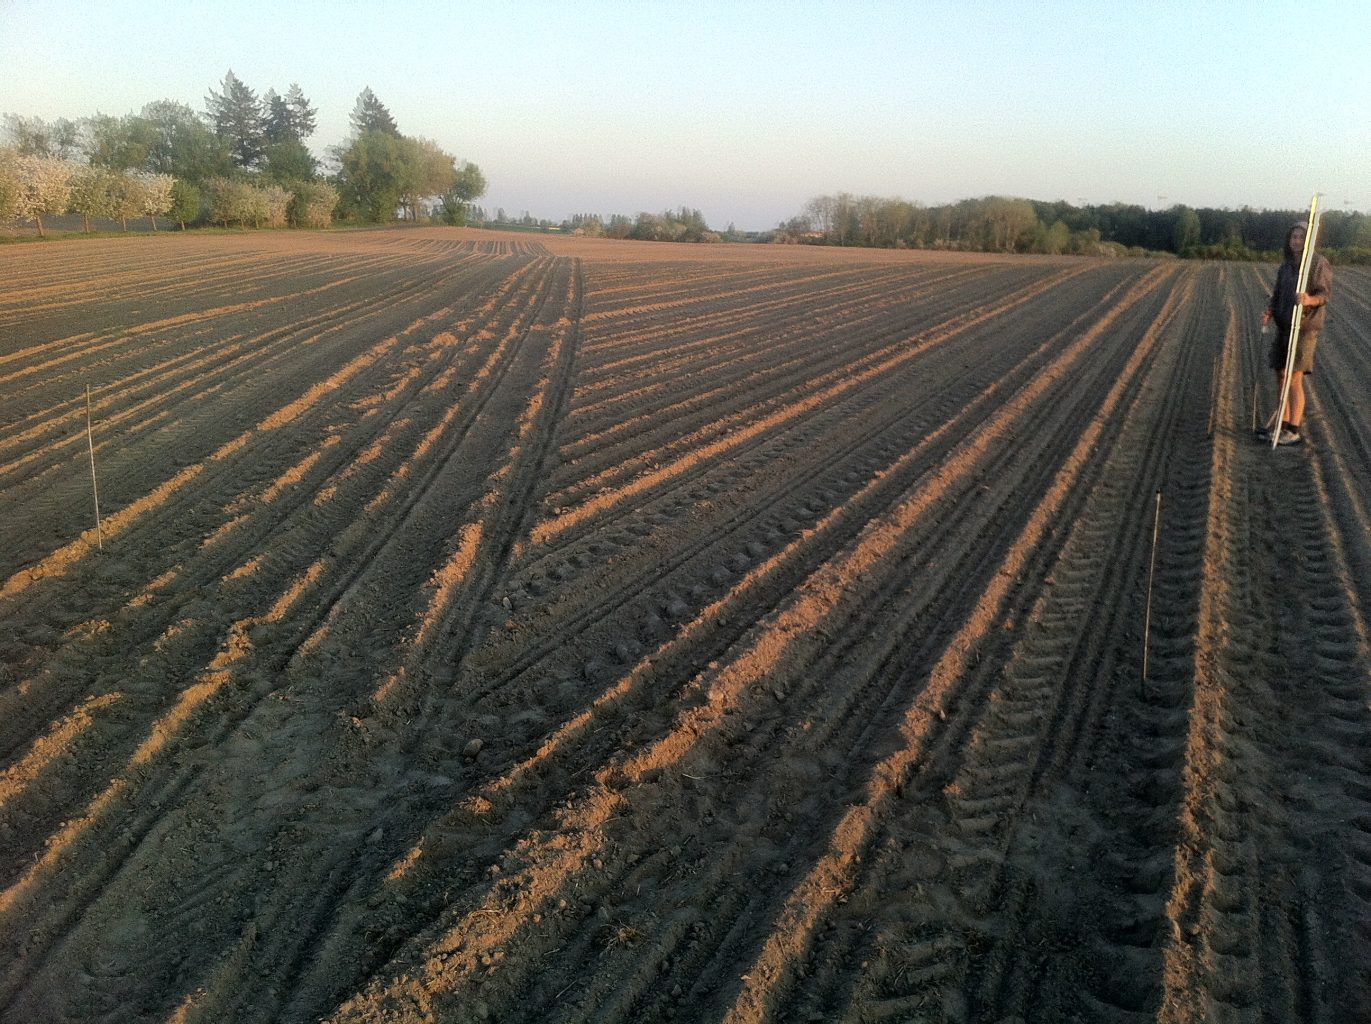 Original position of Acre in the corn field